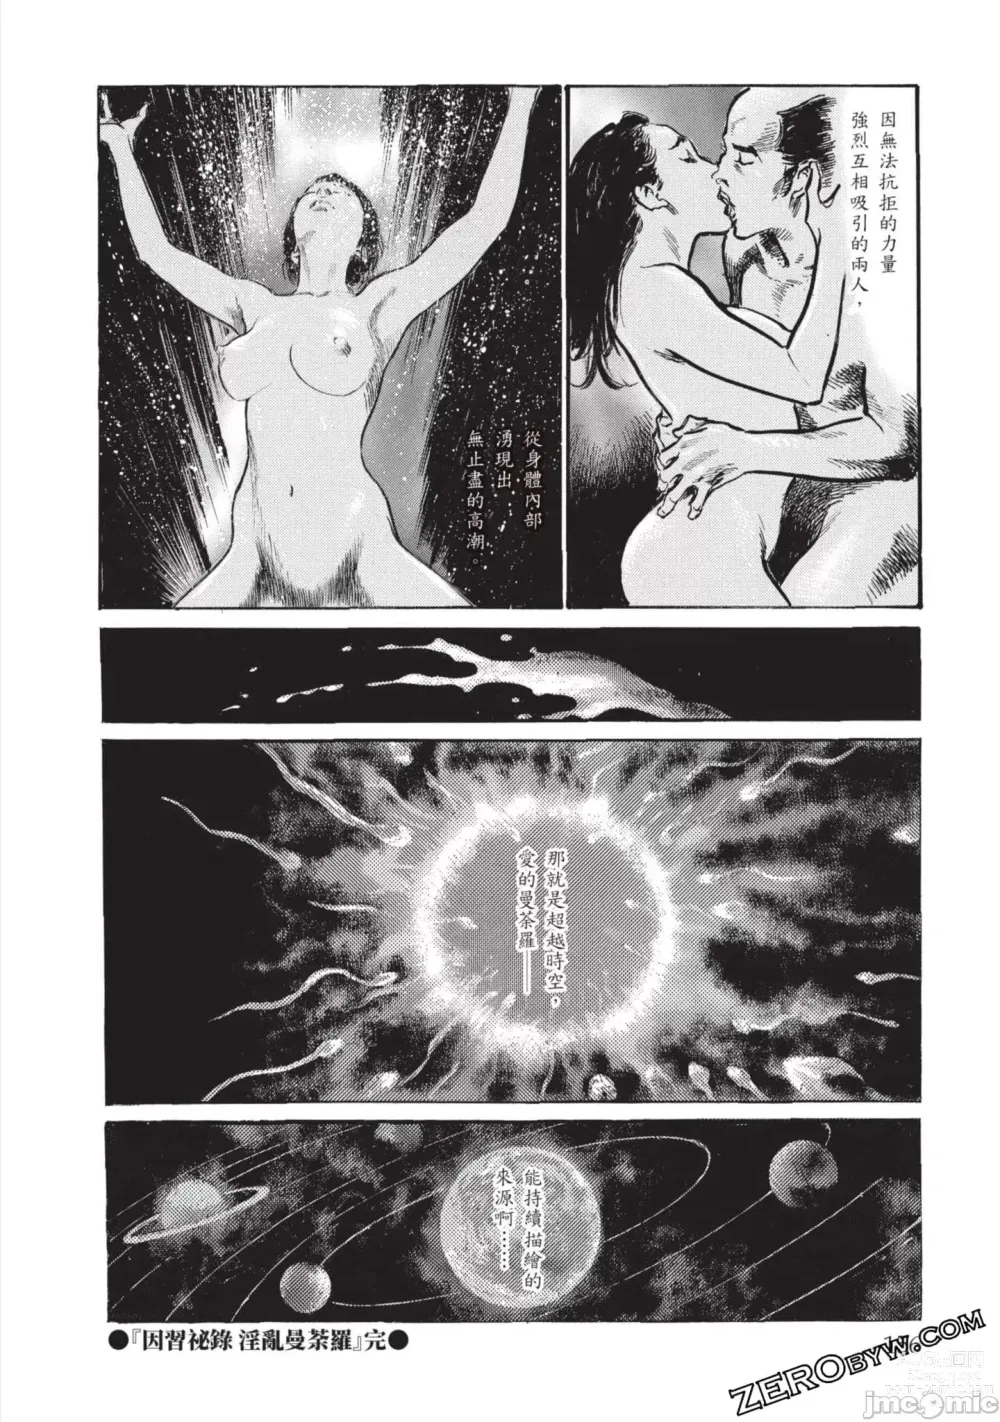 Page 155 of manga Inshuu Hiroku Midare Mandara 3